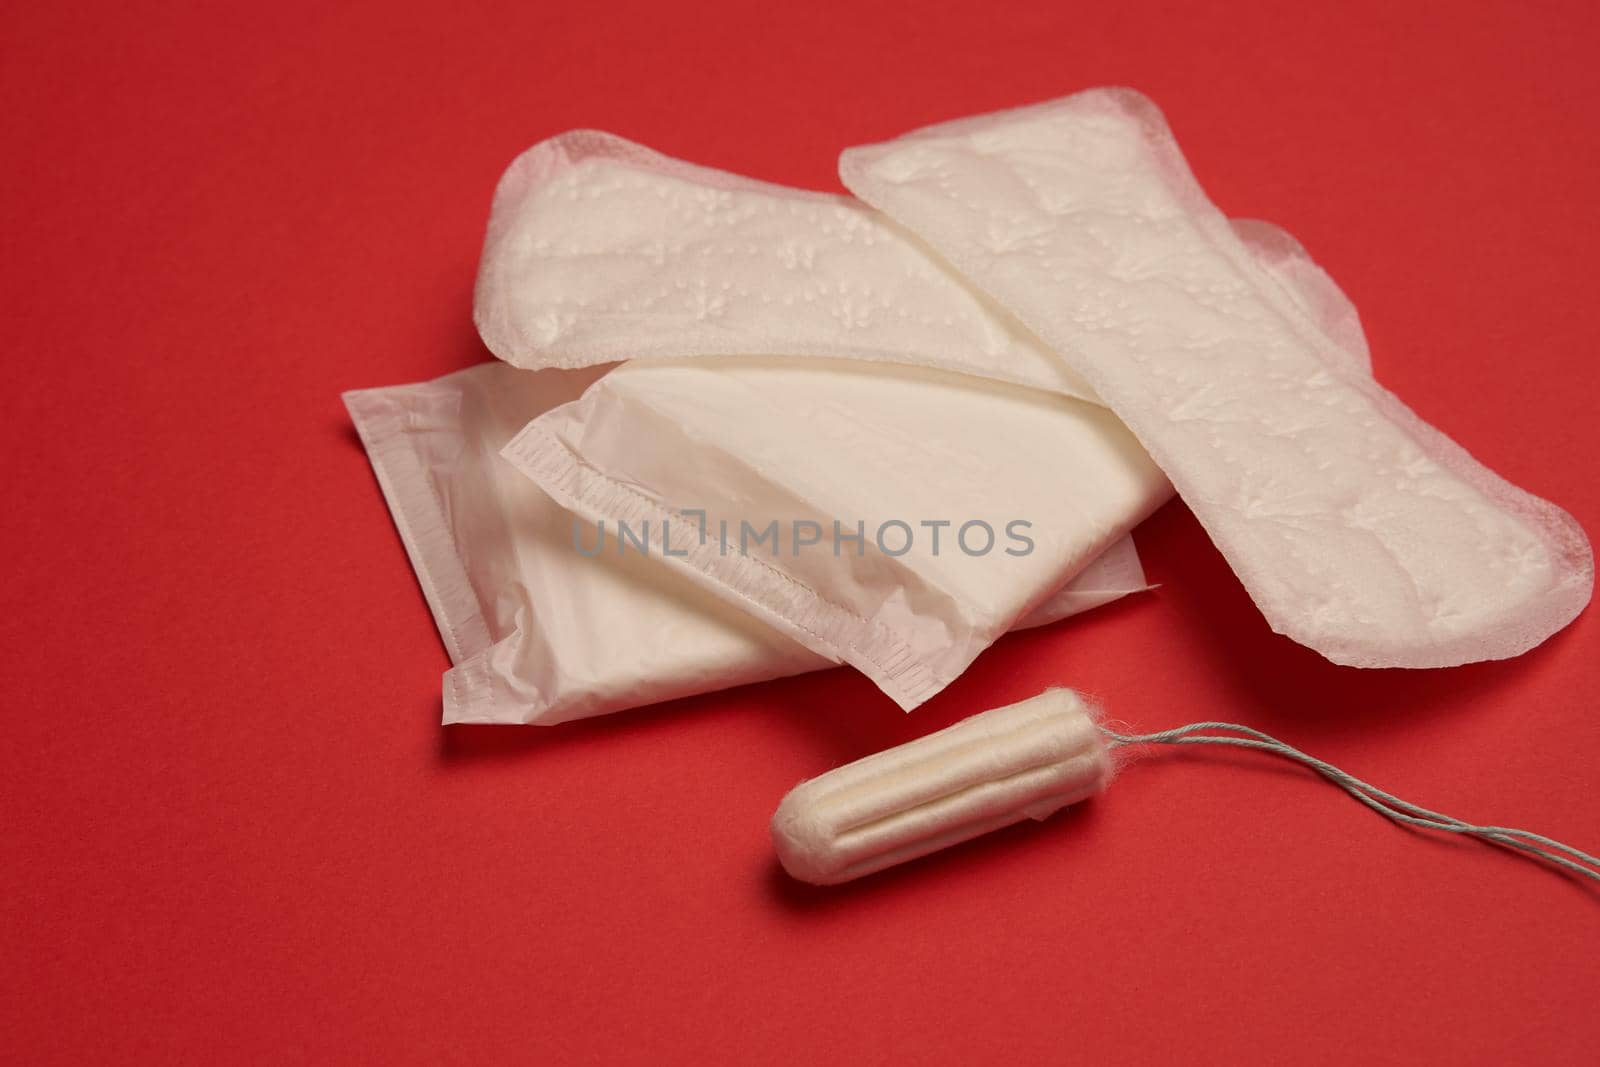 pads tampons underwear feminine hygiene red background. High quality photo